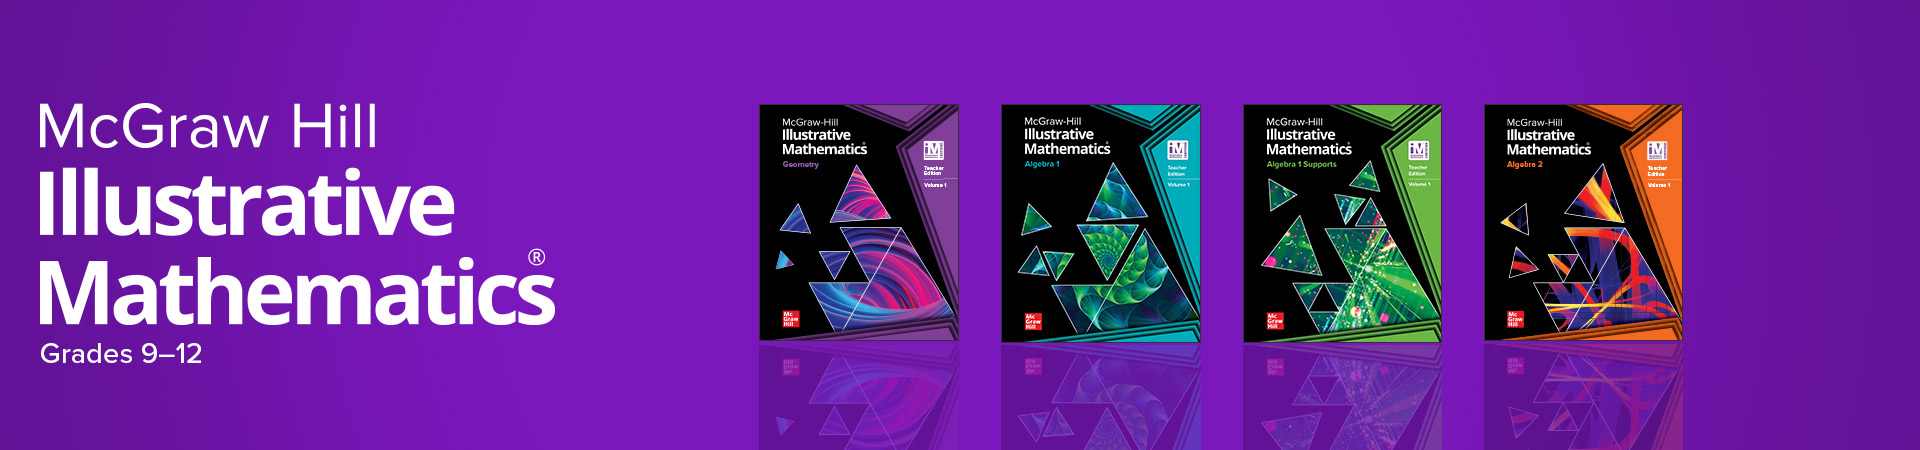 McGraw Hill Illustrative Mathematics Grades 9-12